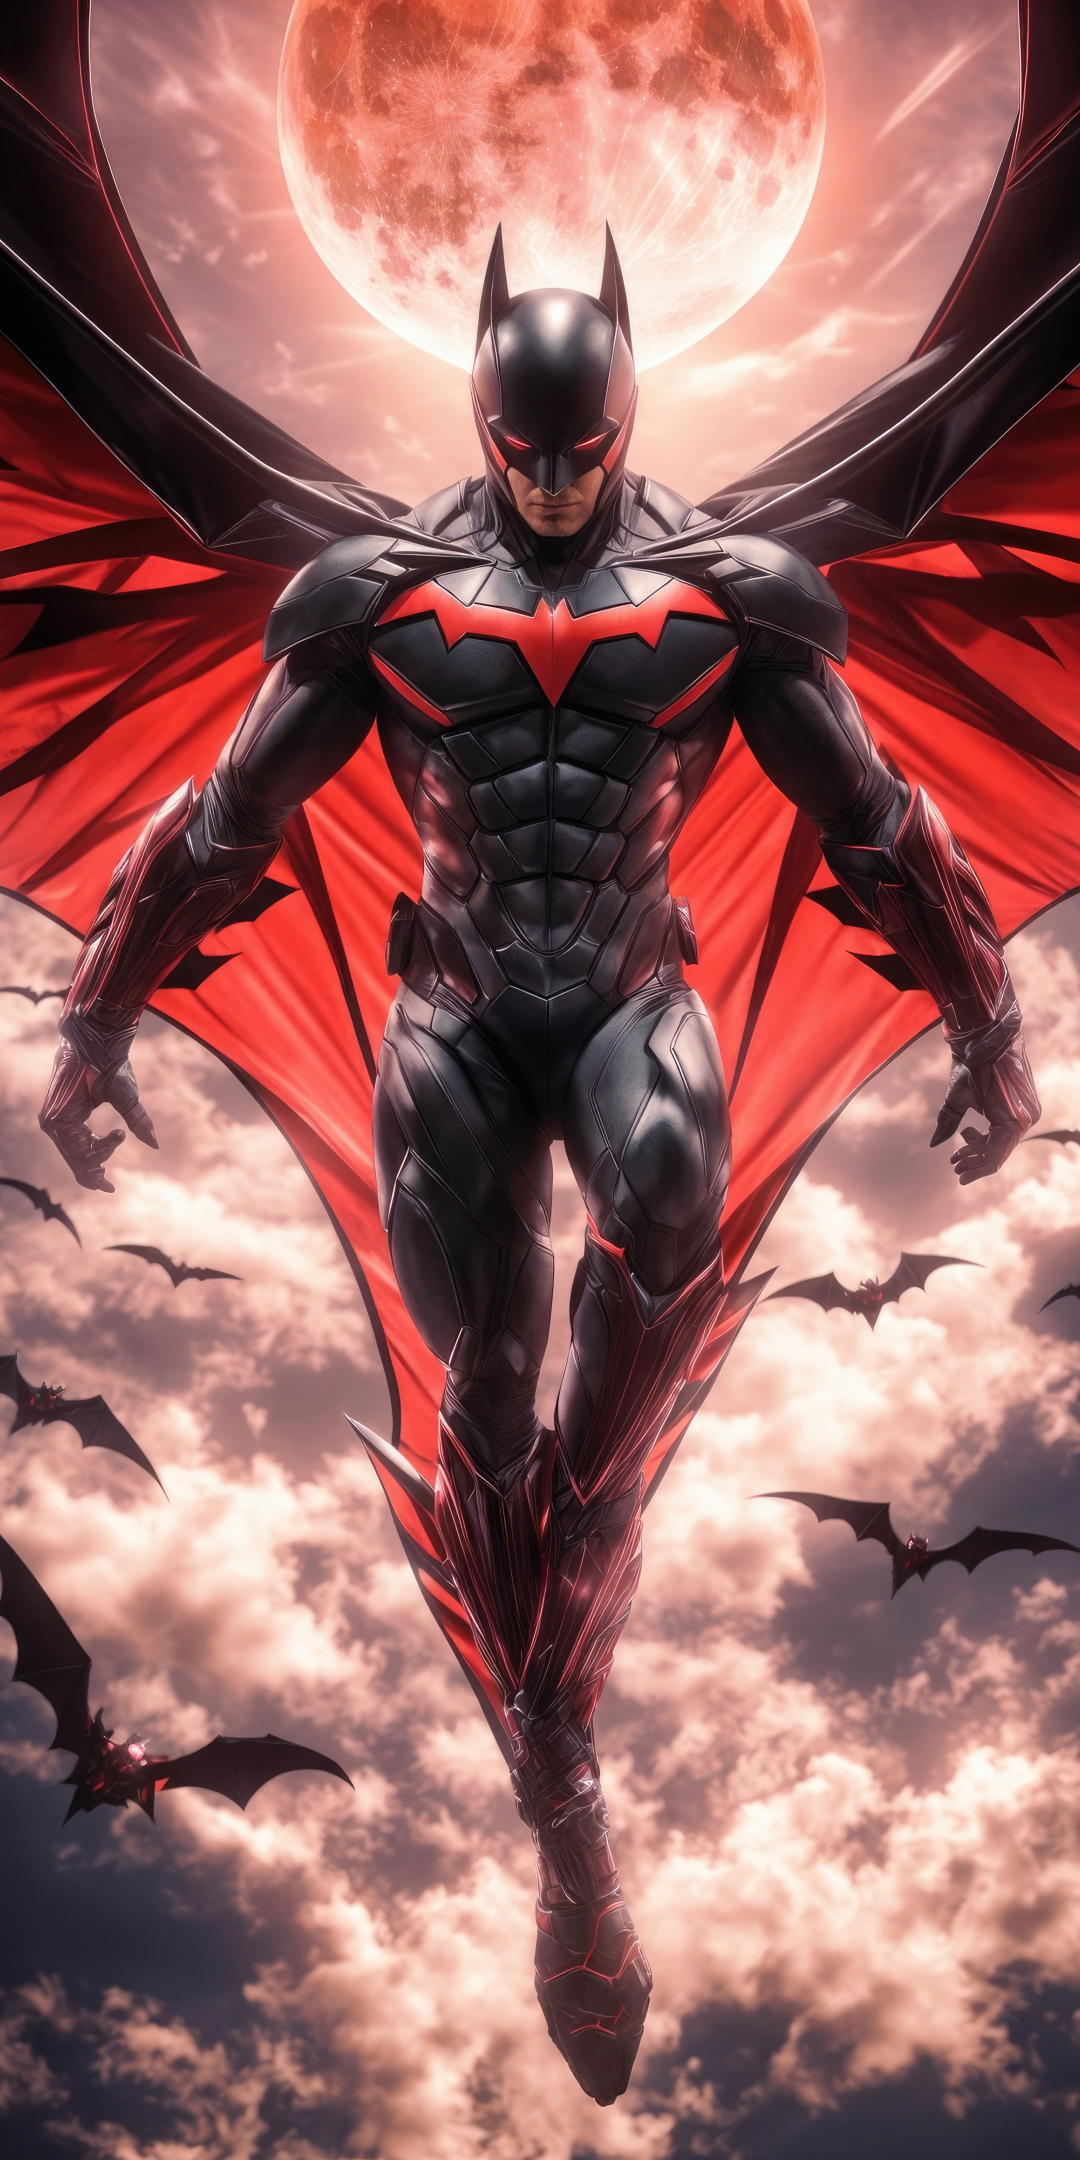 Batman beyond, high flying in sky, patrolling the city, batman, 1080x2160 wallpaper